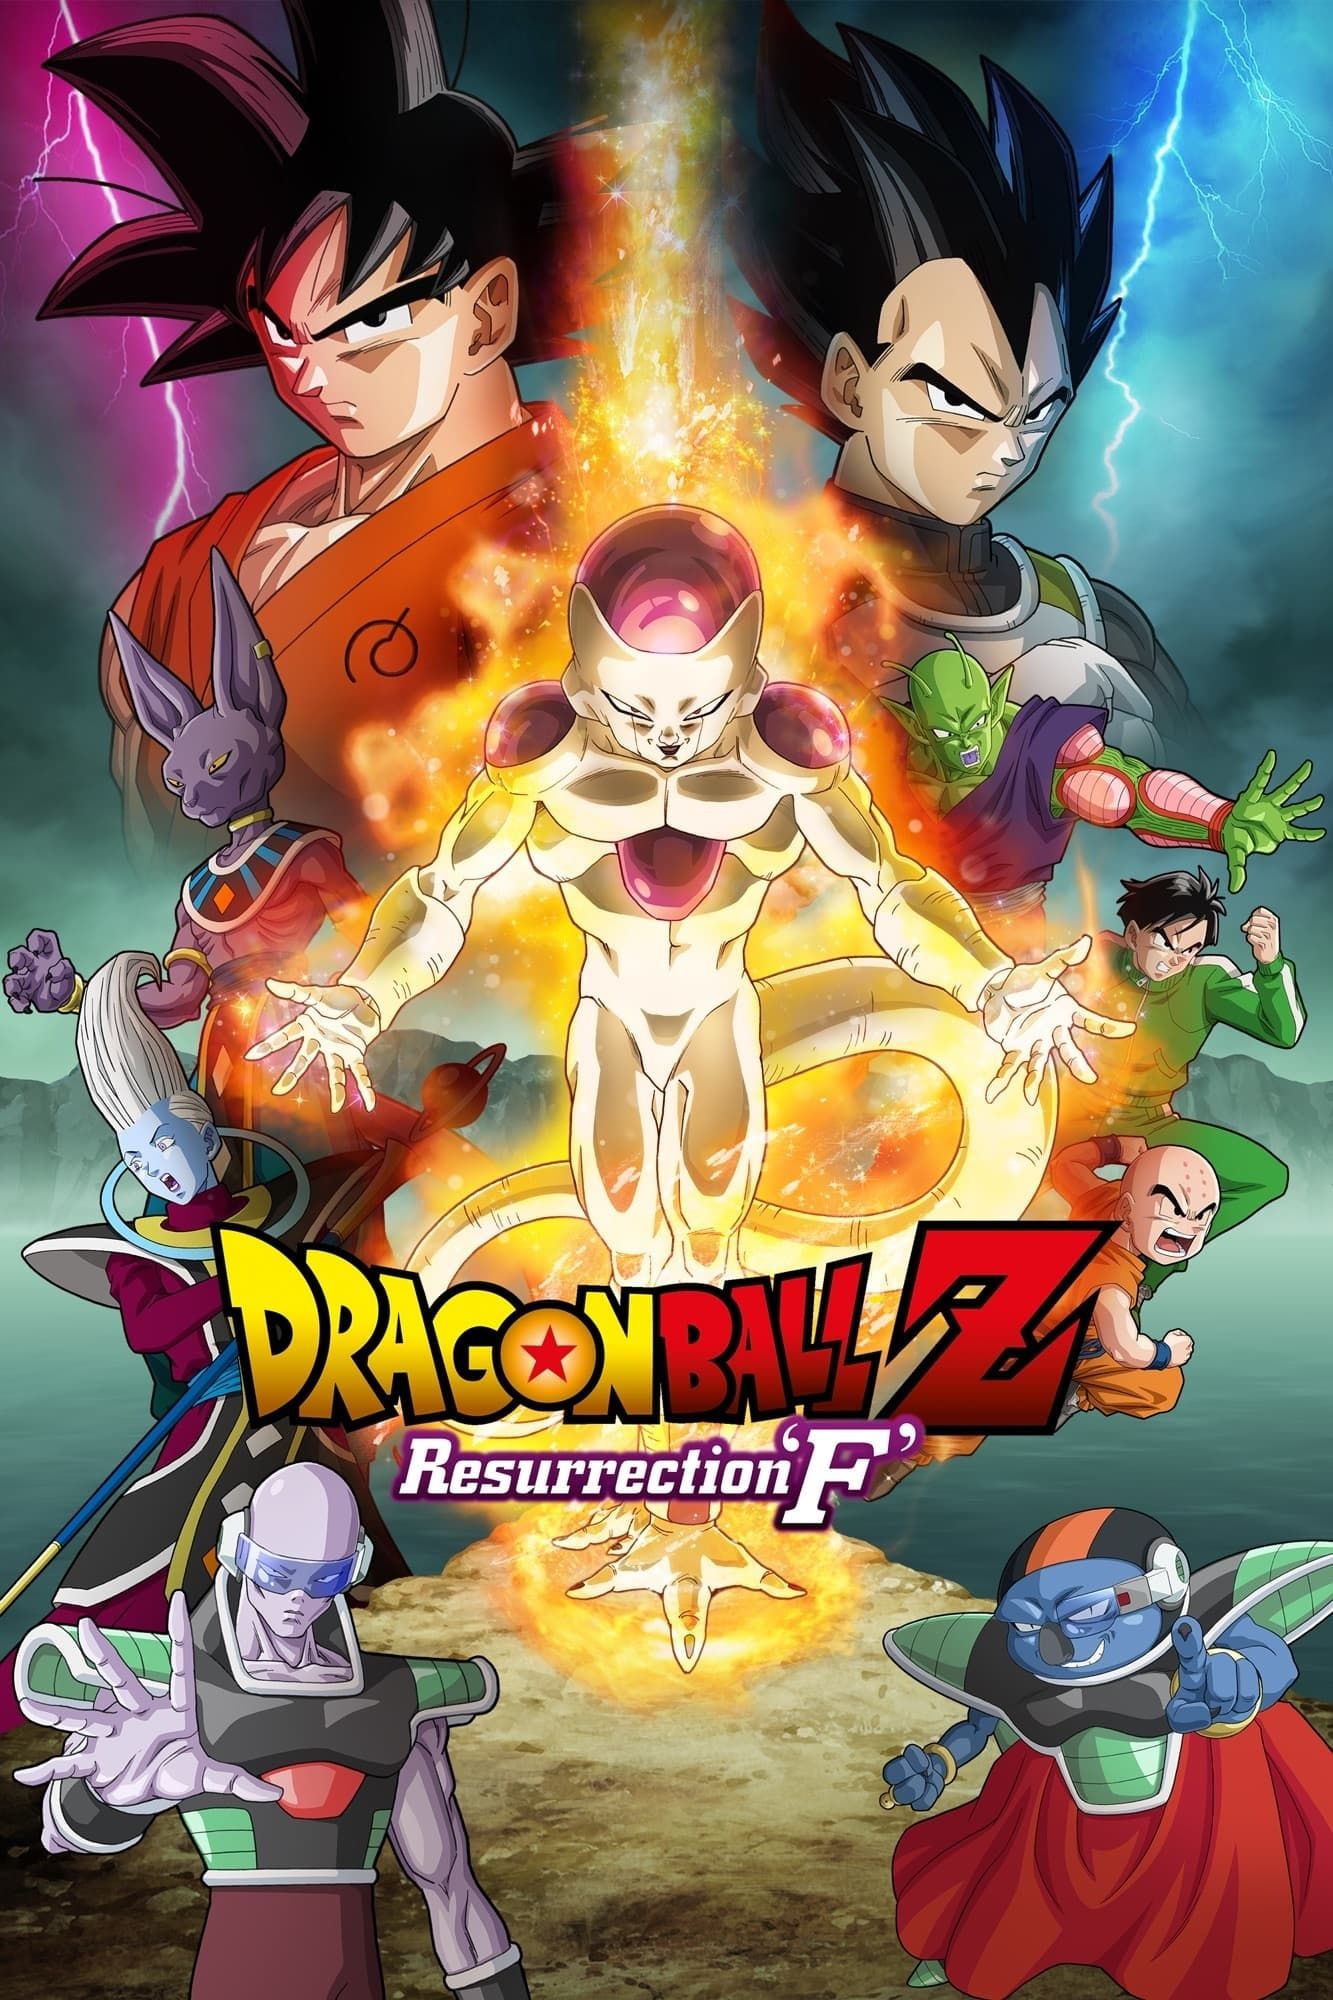 Dragon Ball Kai (2009) - Assistir Animes Online HD